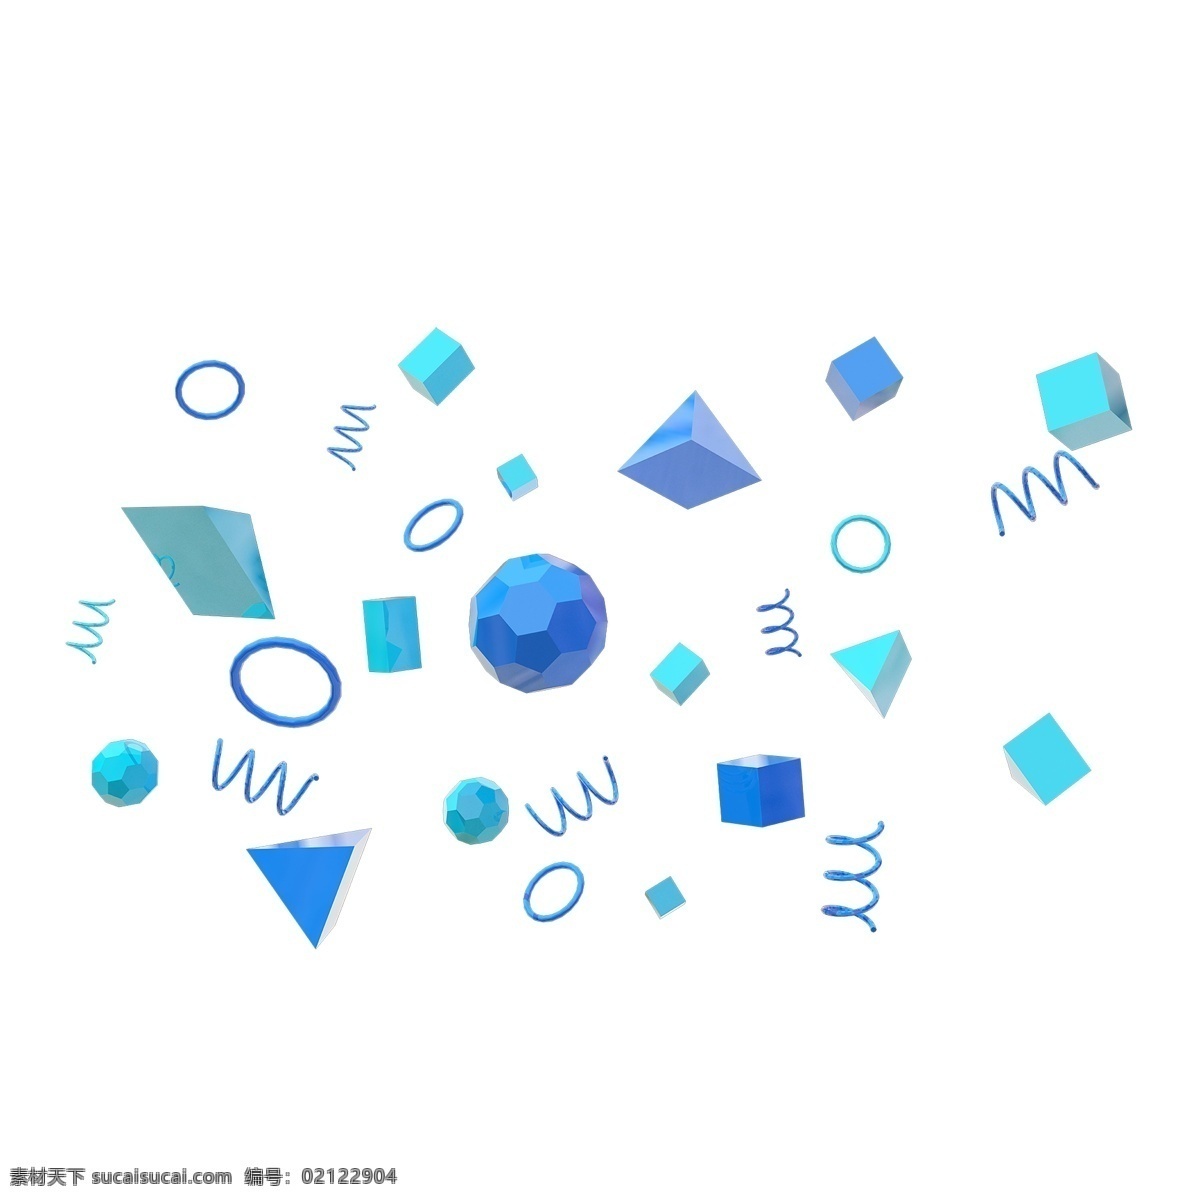 c4d 蓝色 天蓝色 多边形 漂浮 蓝色漂浮 装饰颗粒 悬浮 球体 方形 螺旋体 颗粒